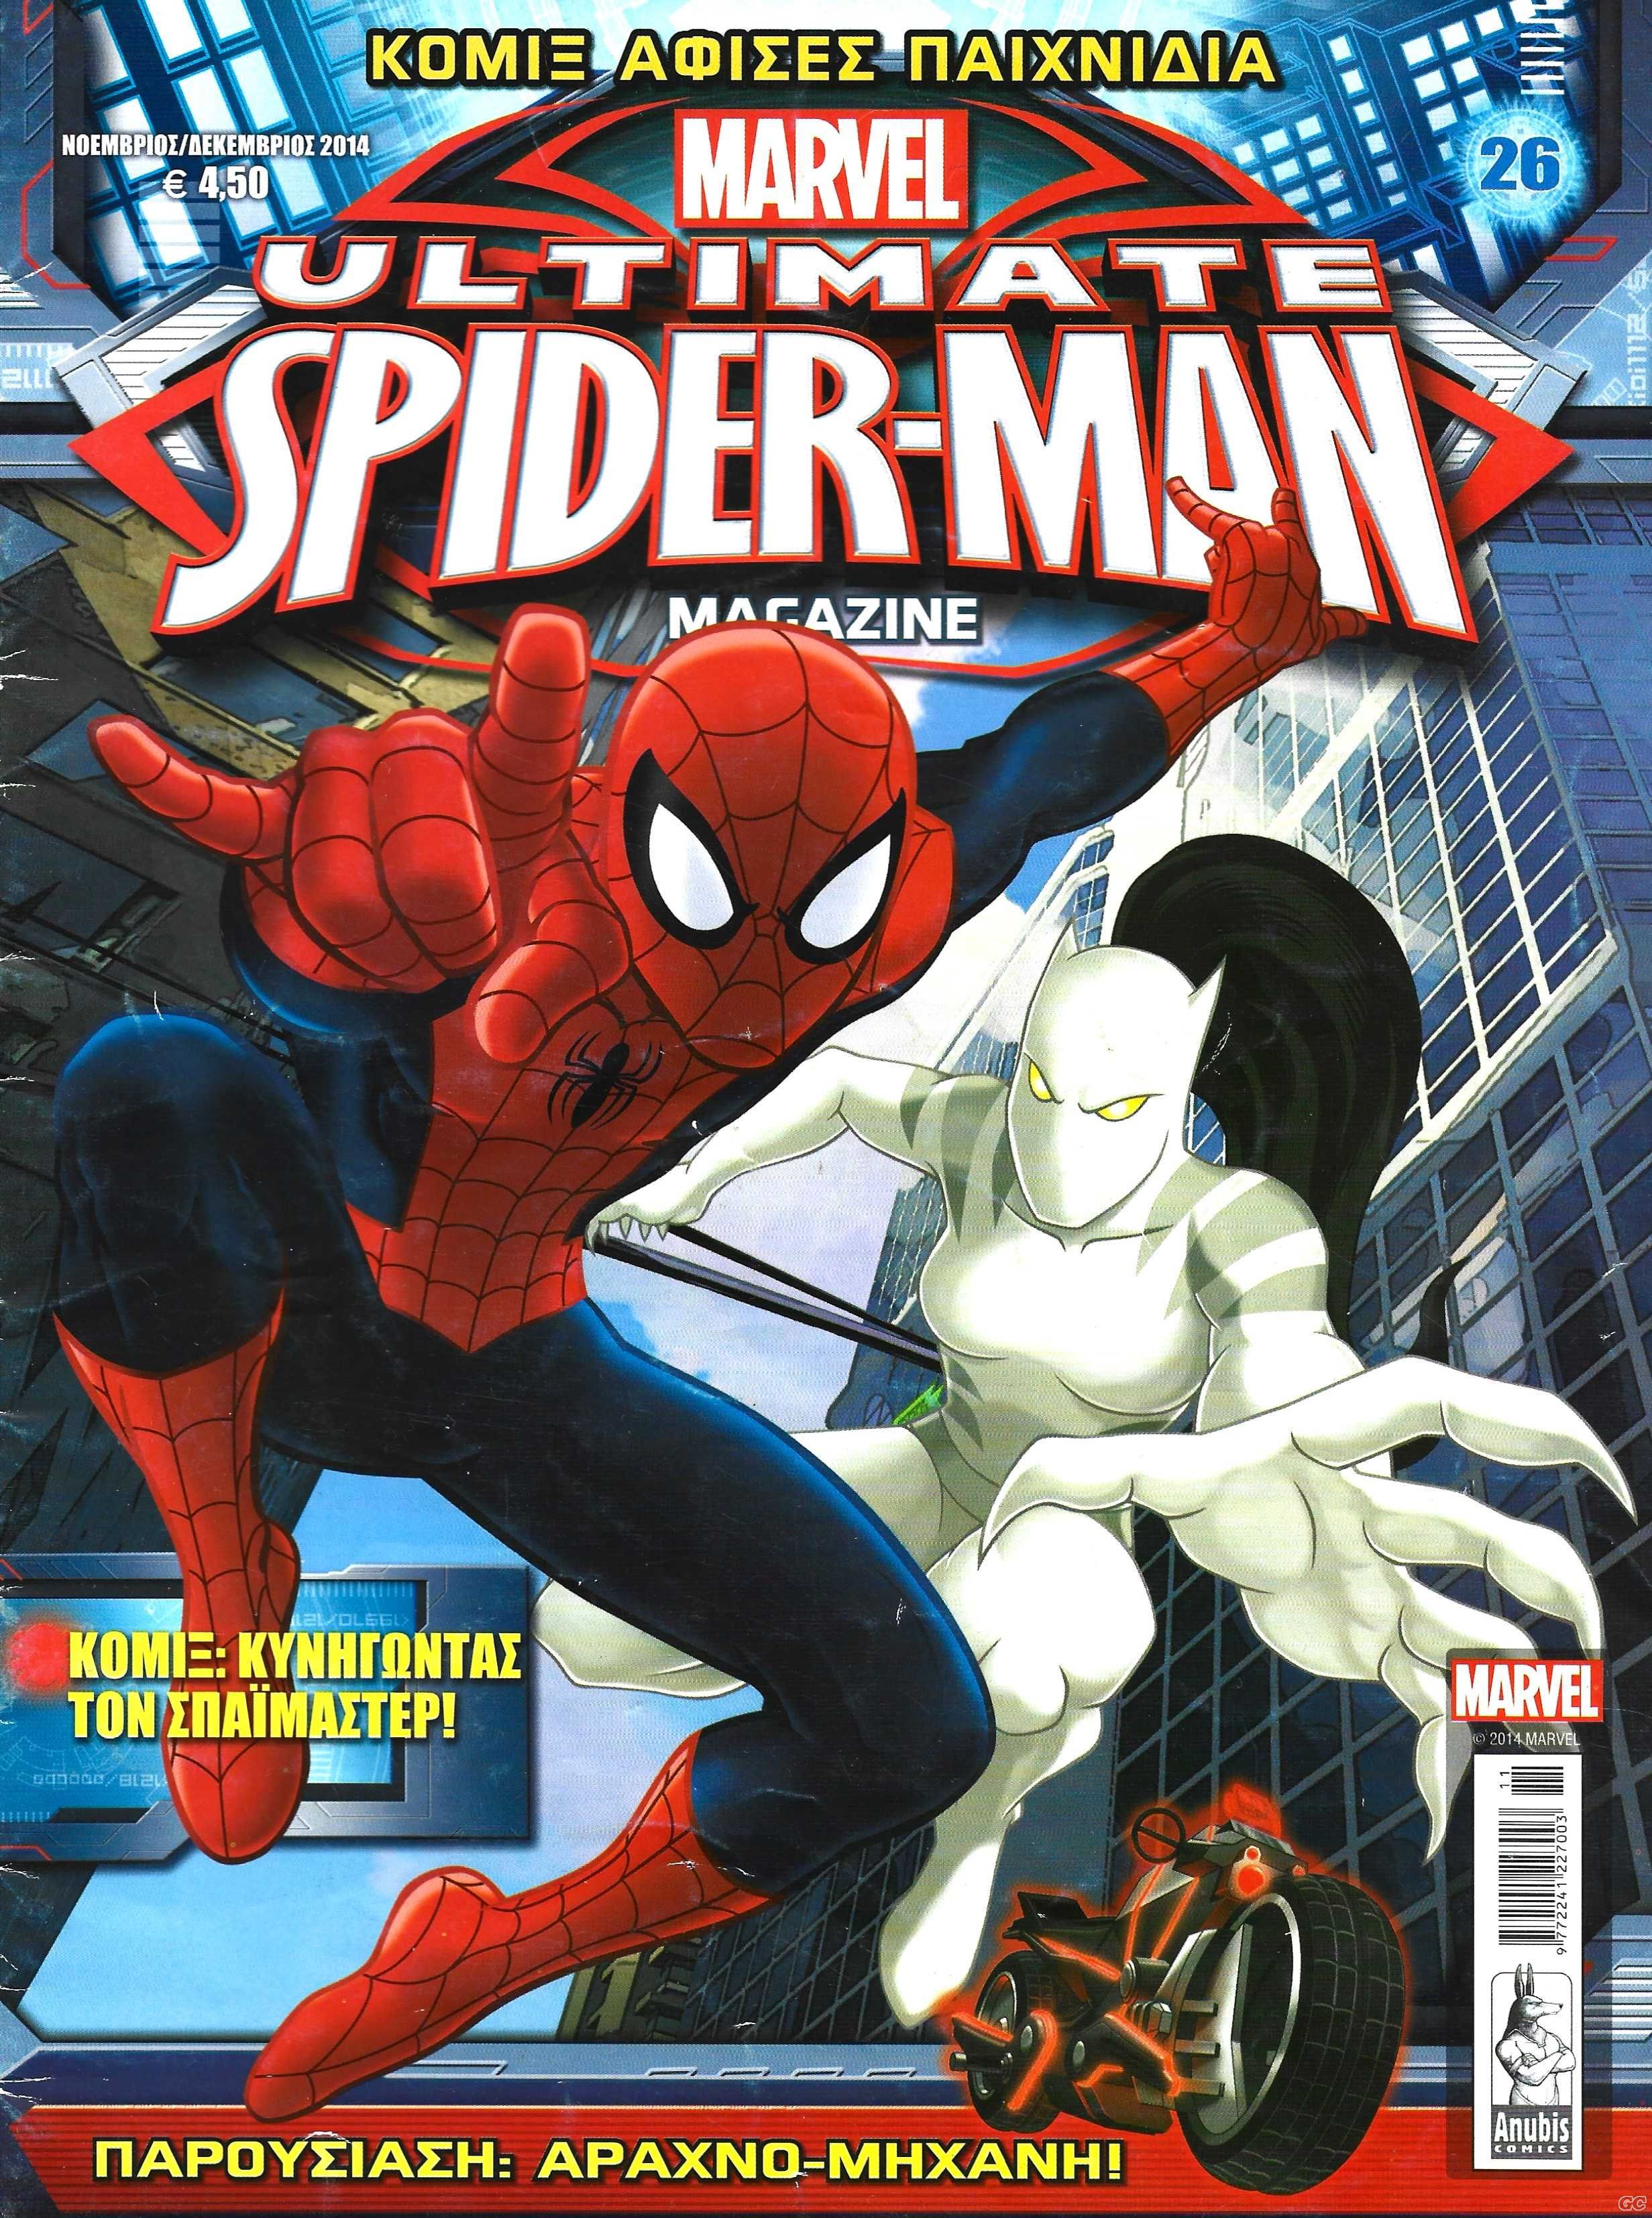 SpidermanMagazine_0026.jpg